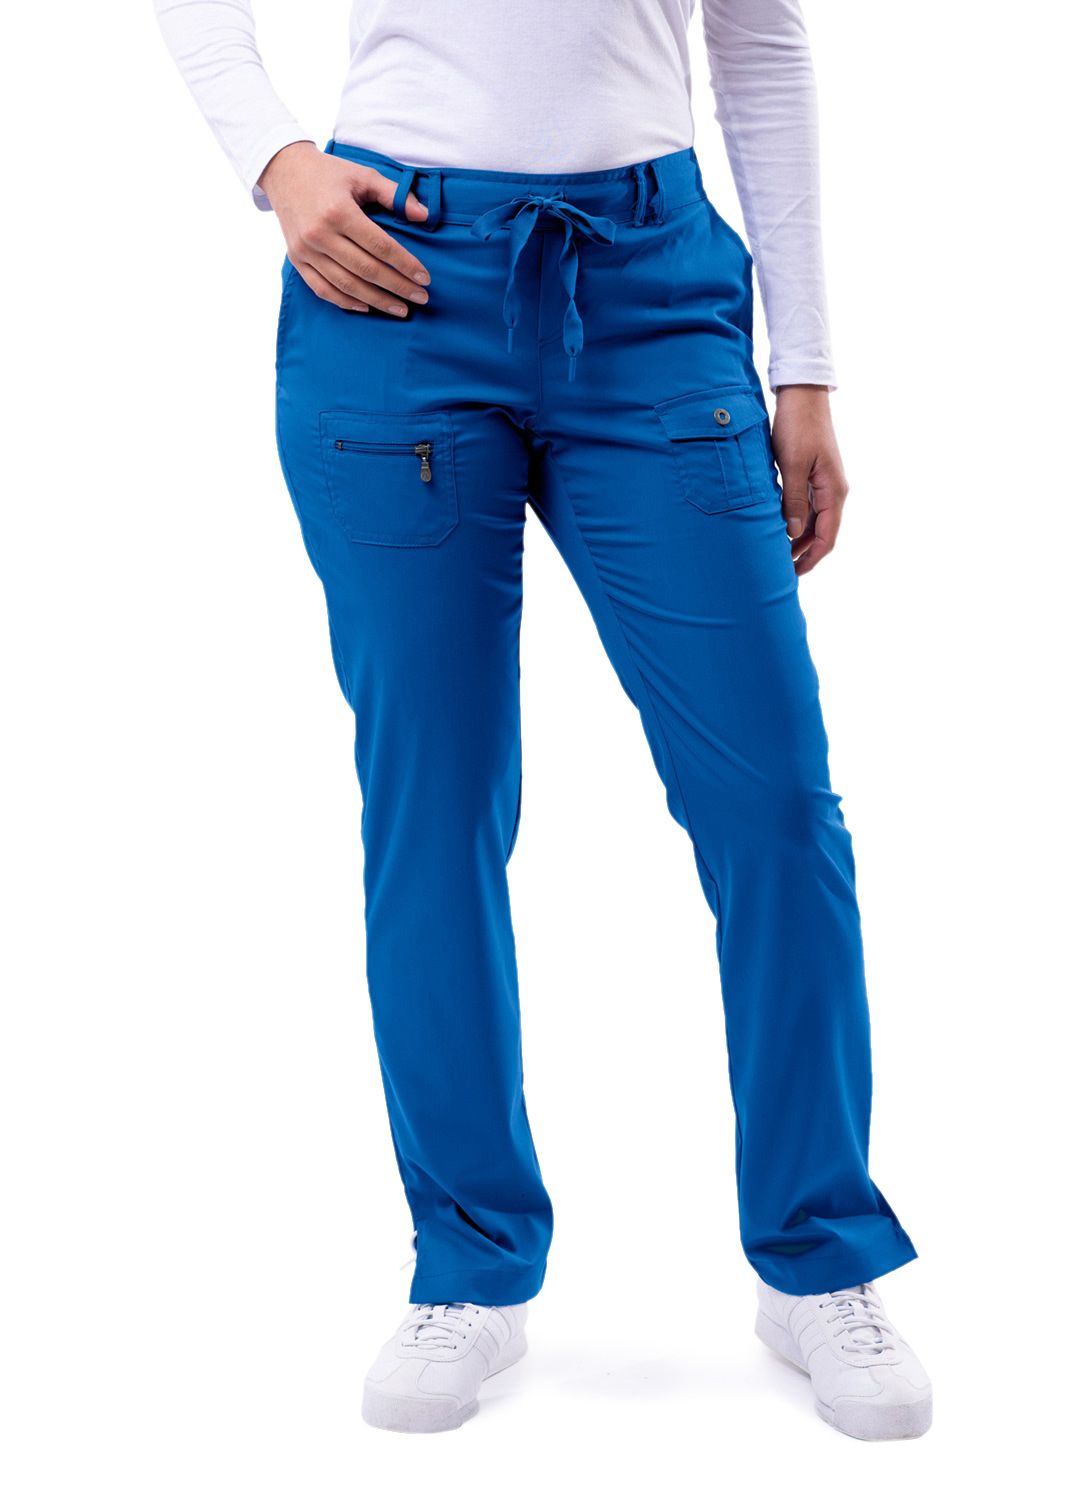 Pro Heather Slim Fit 6 Pocket Scrubs Pant by Adar XXS-3XL (Tall) / Royal Blue